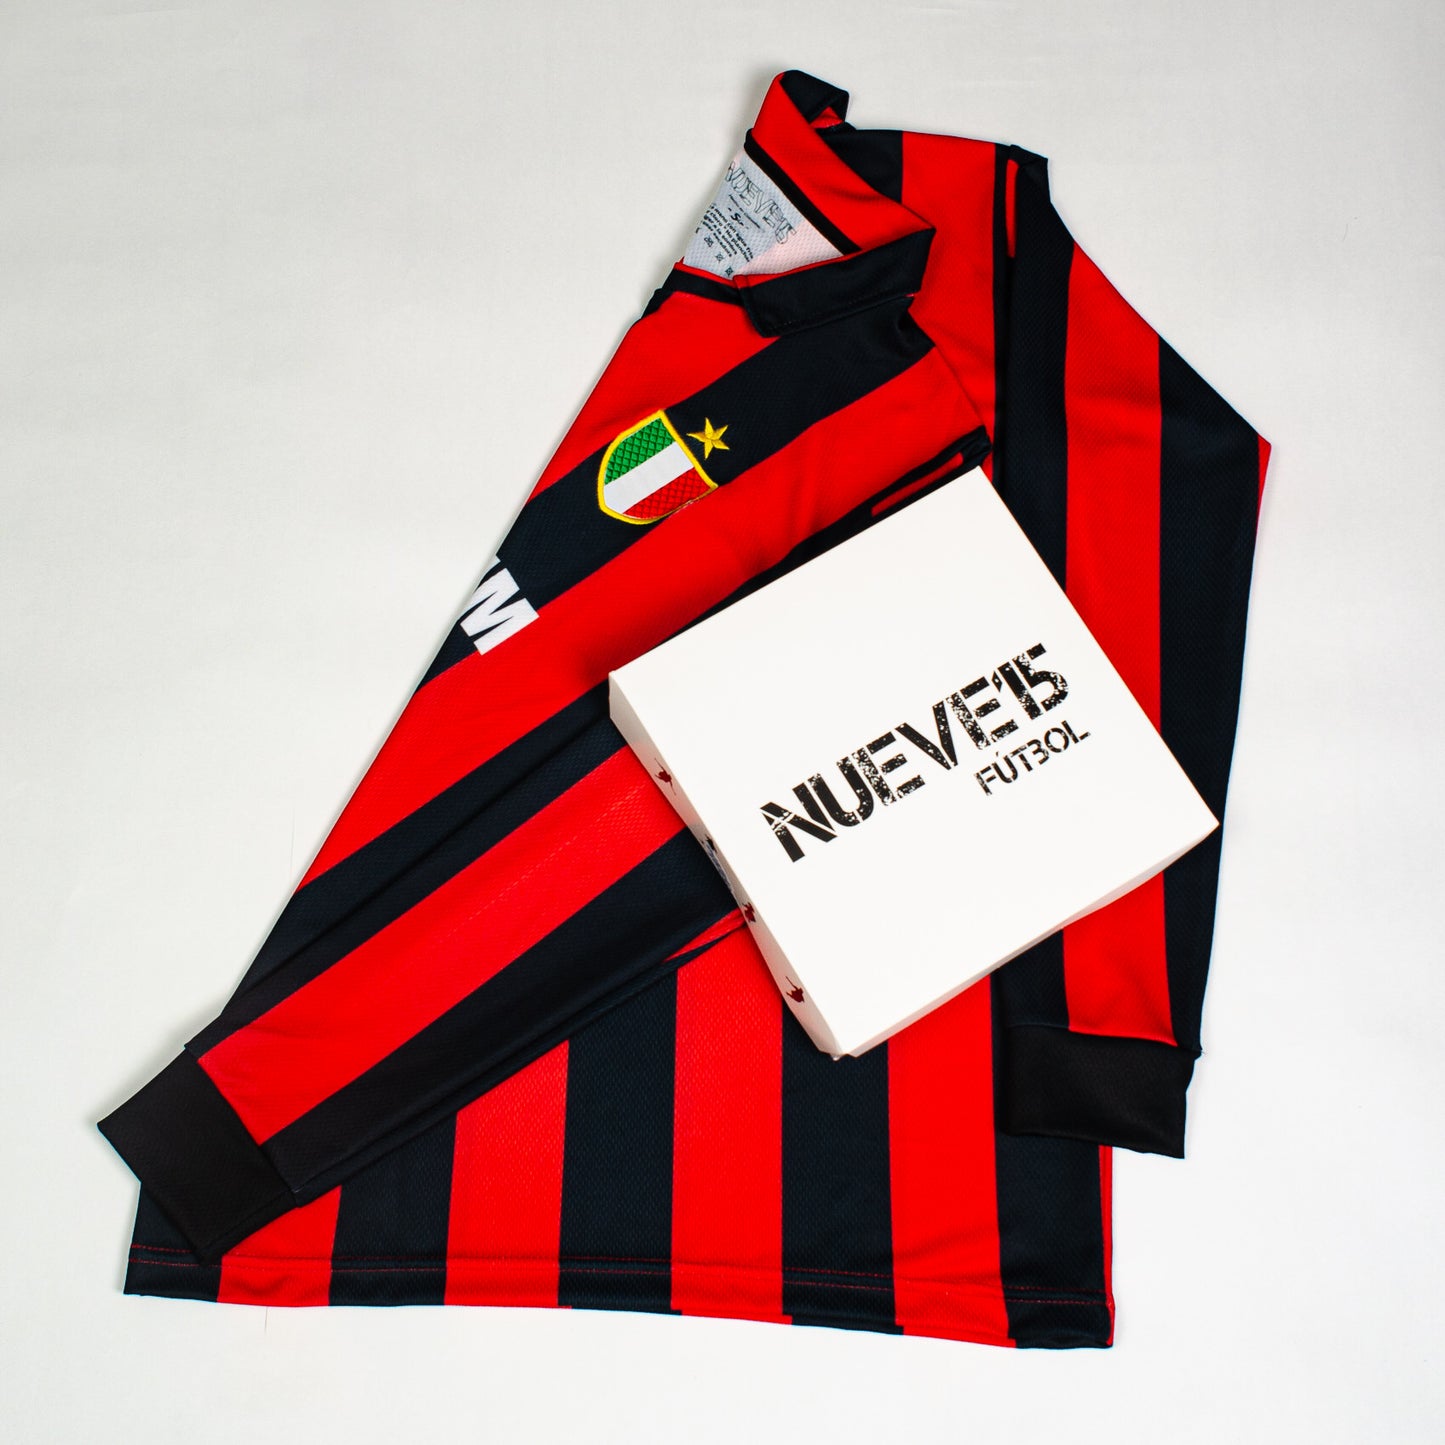 <transcy>Milan season 88/89 shirt</transcy>